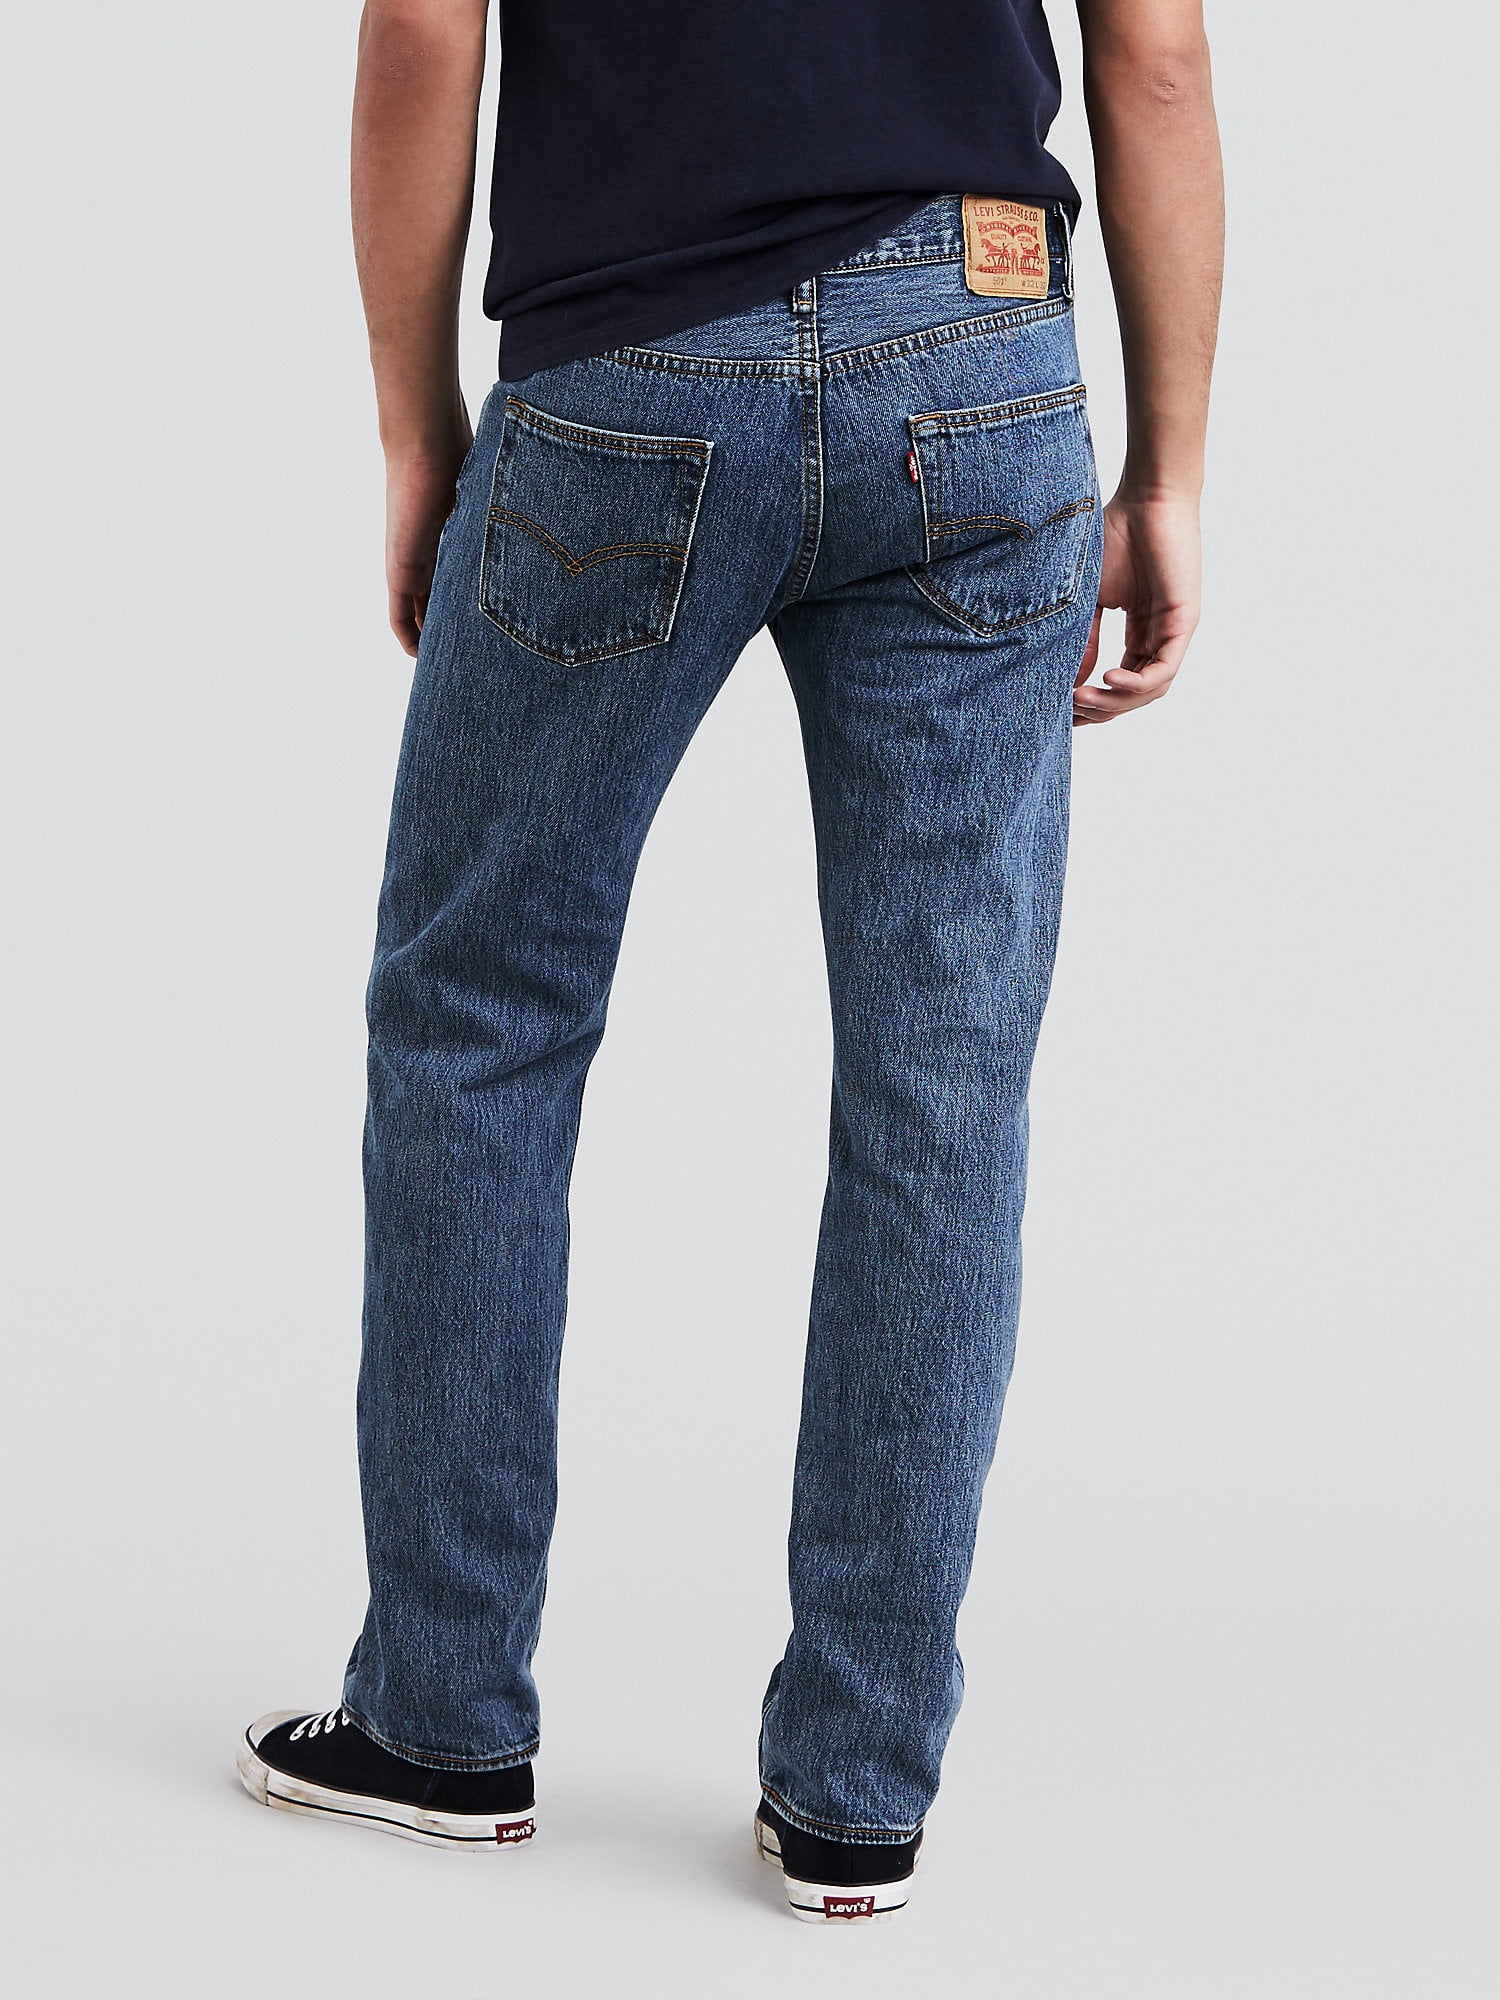 best price on levi 501 jeans